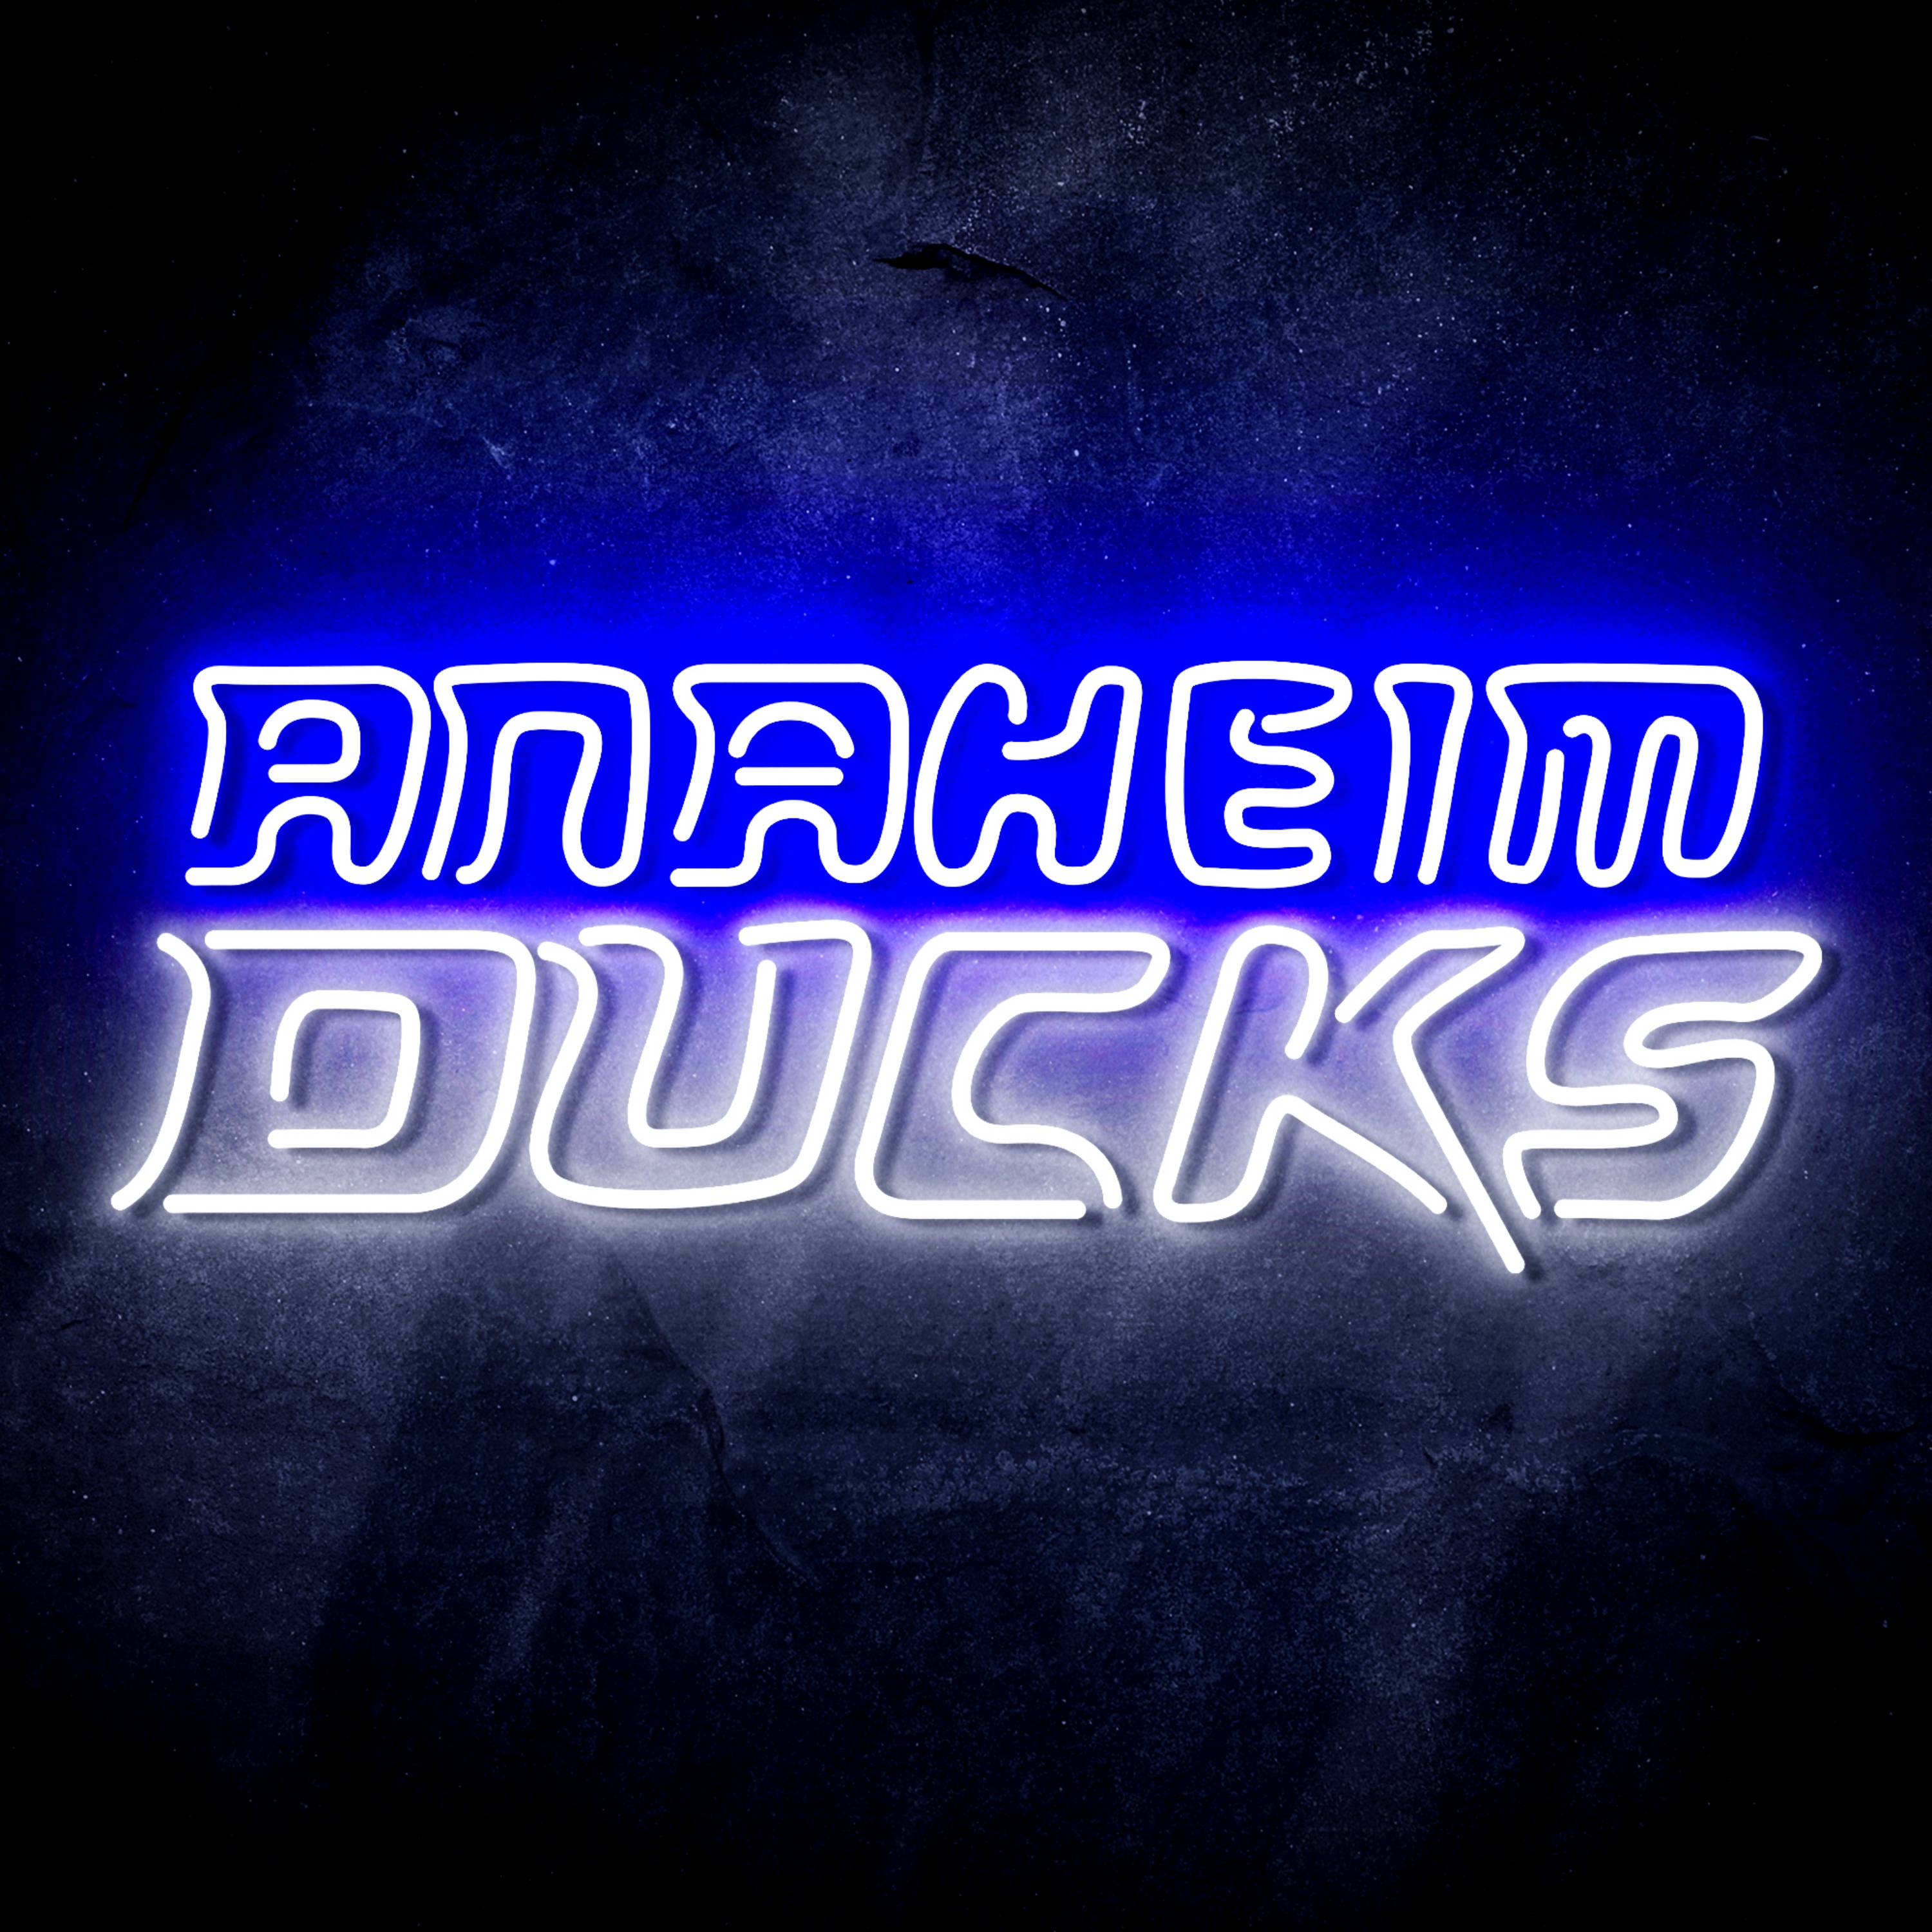 NHL Anaheim Ducks LED Neon Sign